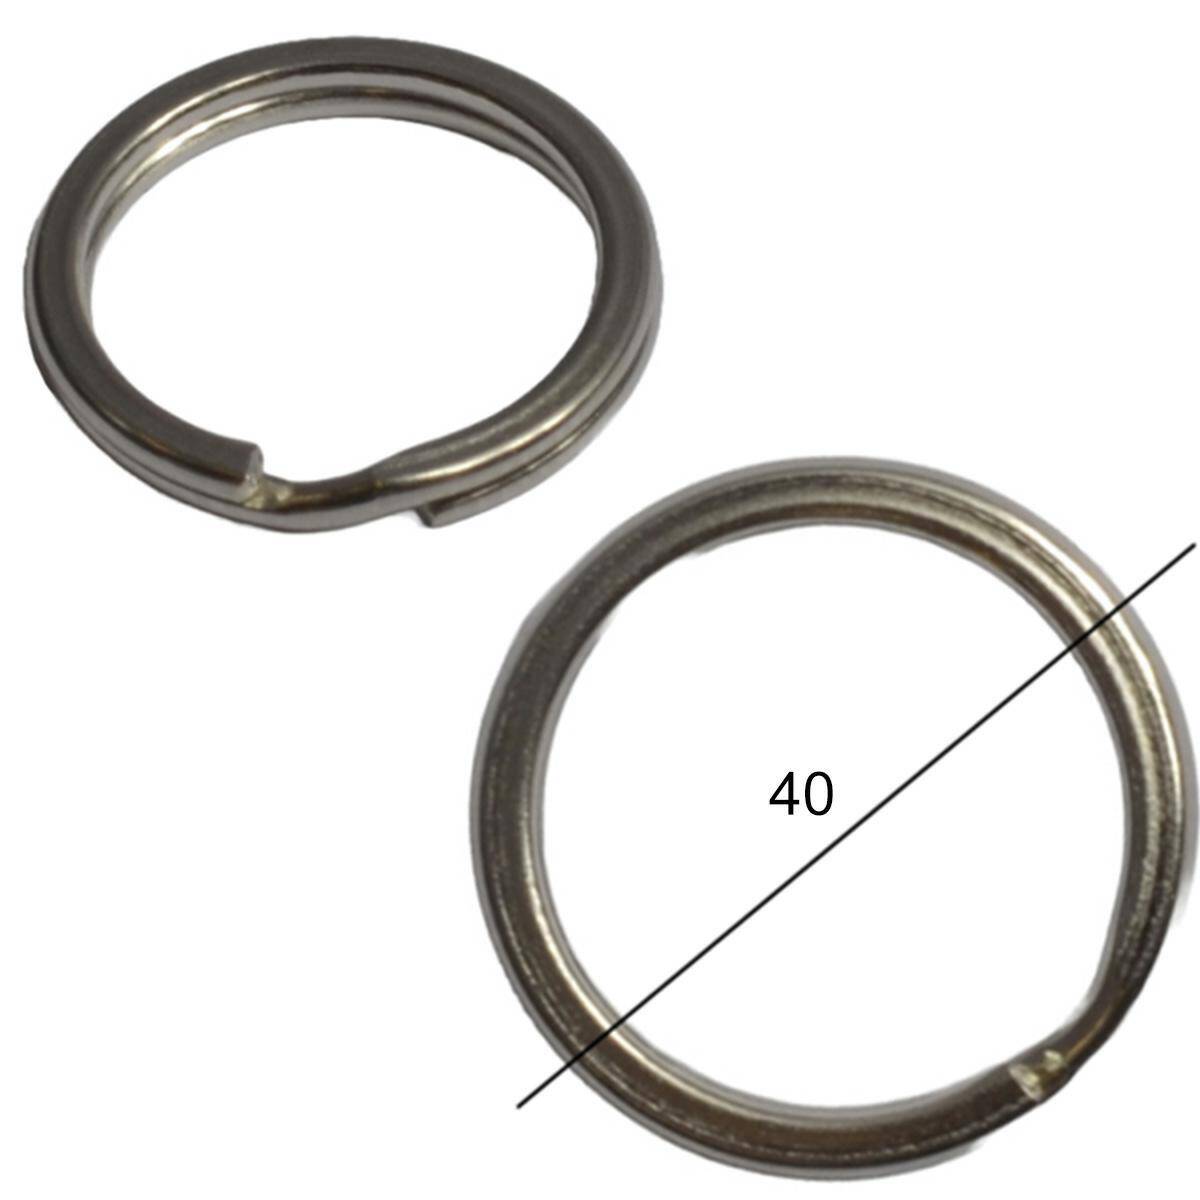 Key rings - flat - 40 mm